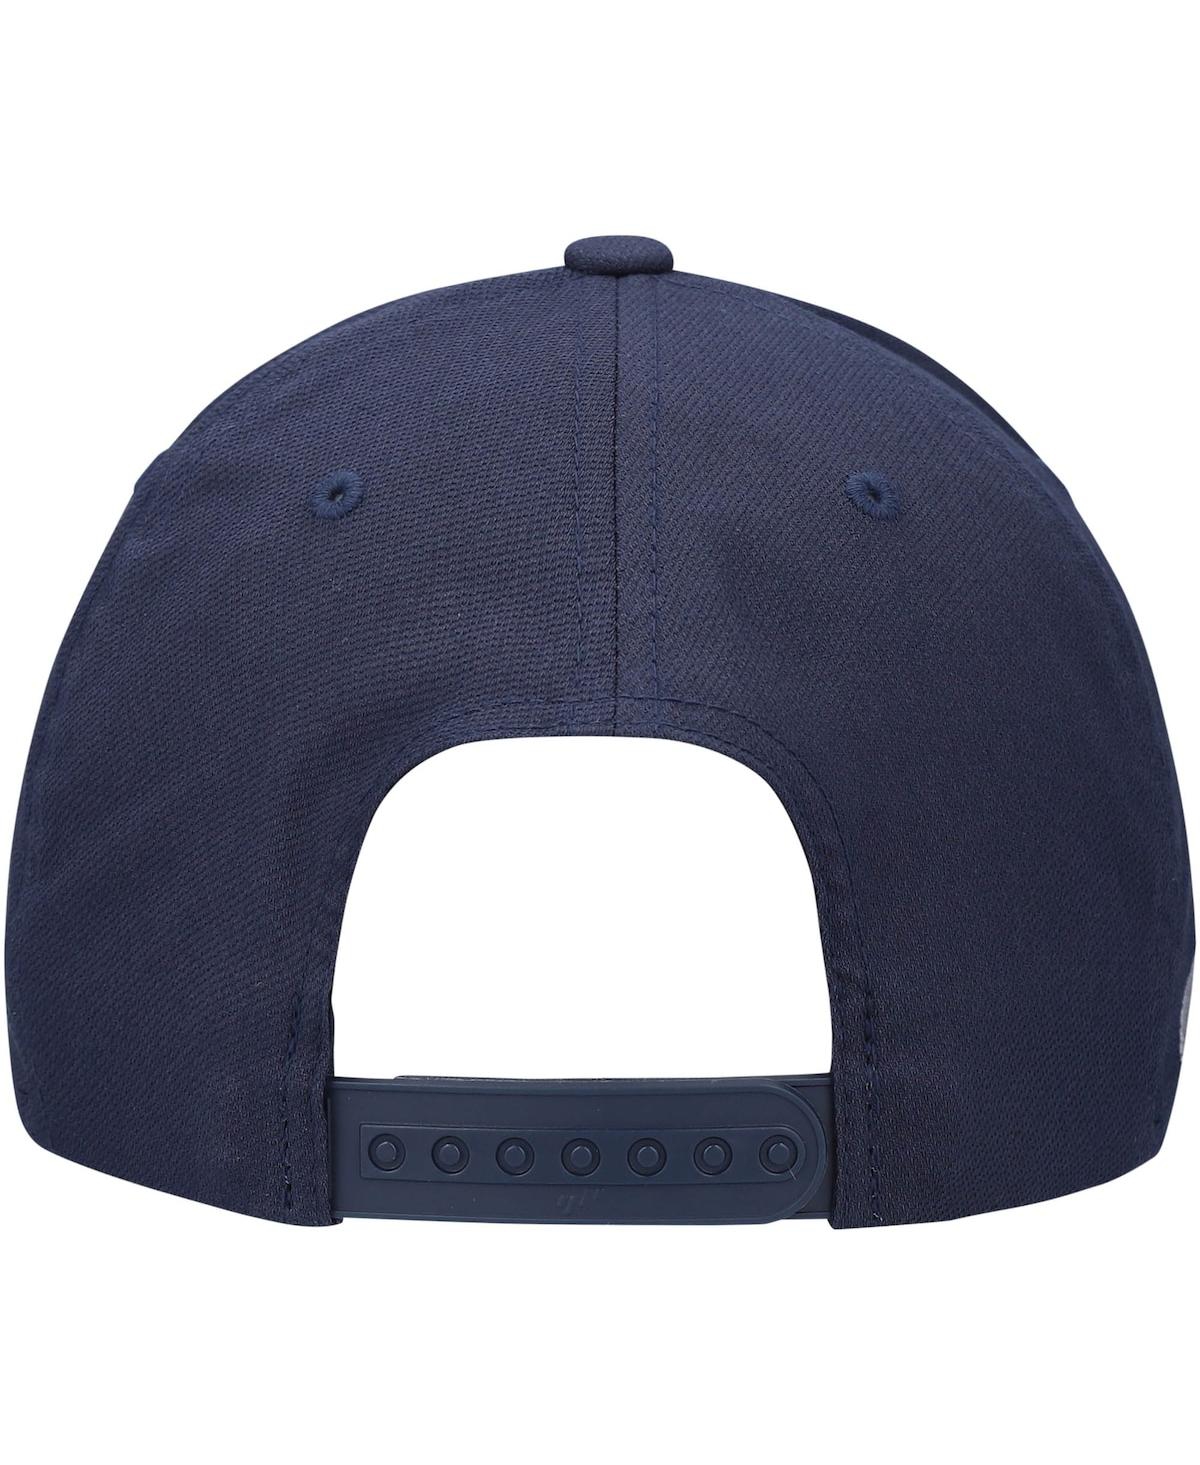 Shop Travis Mathew Men's Travismathew Navy Hot Streak Snapback Hat